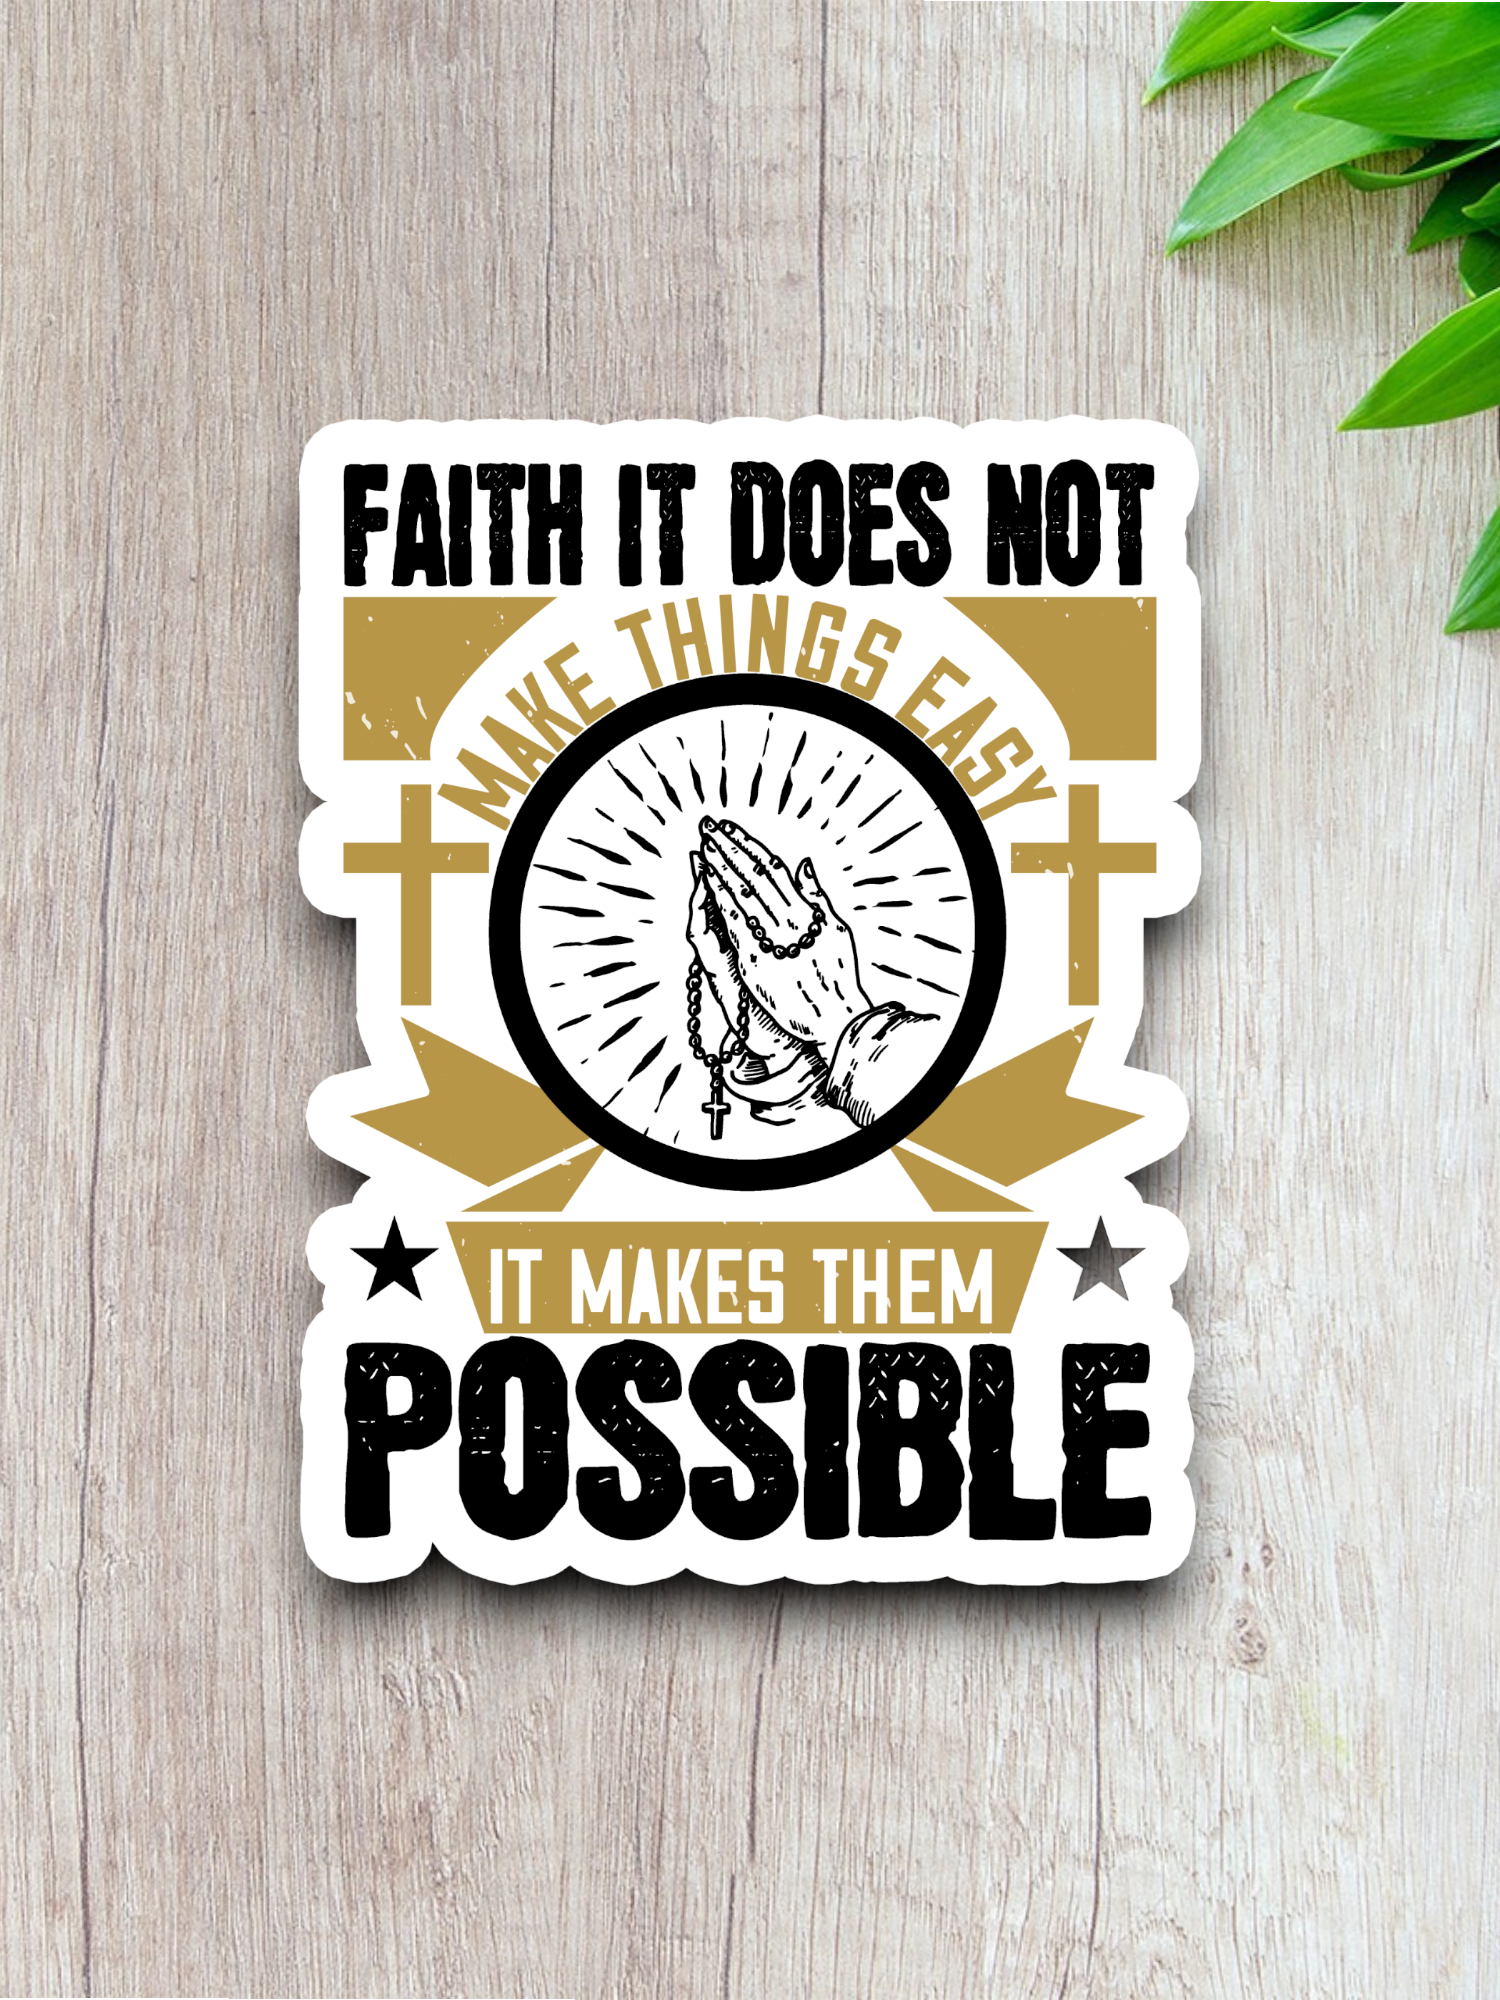 Faith It Does Not Make Things Easy 03 - Faith Sticker